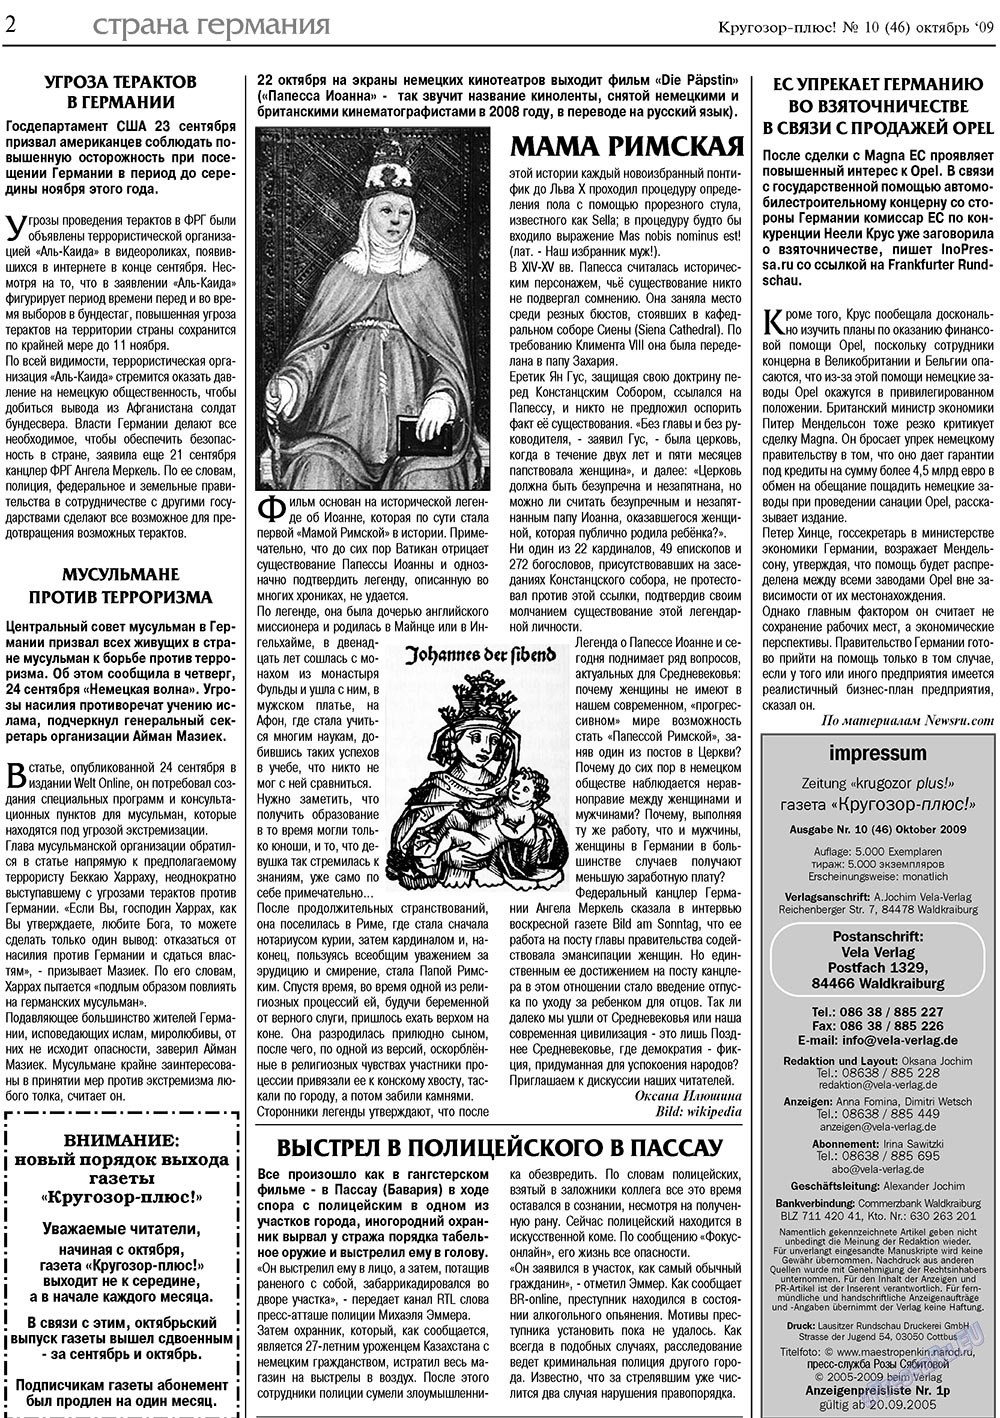 Кругозор плюс! (газета). 2009 год, номер 10, стр. 2